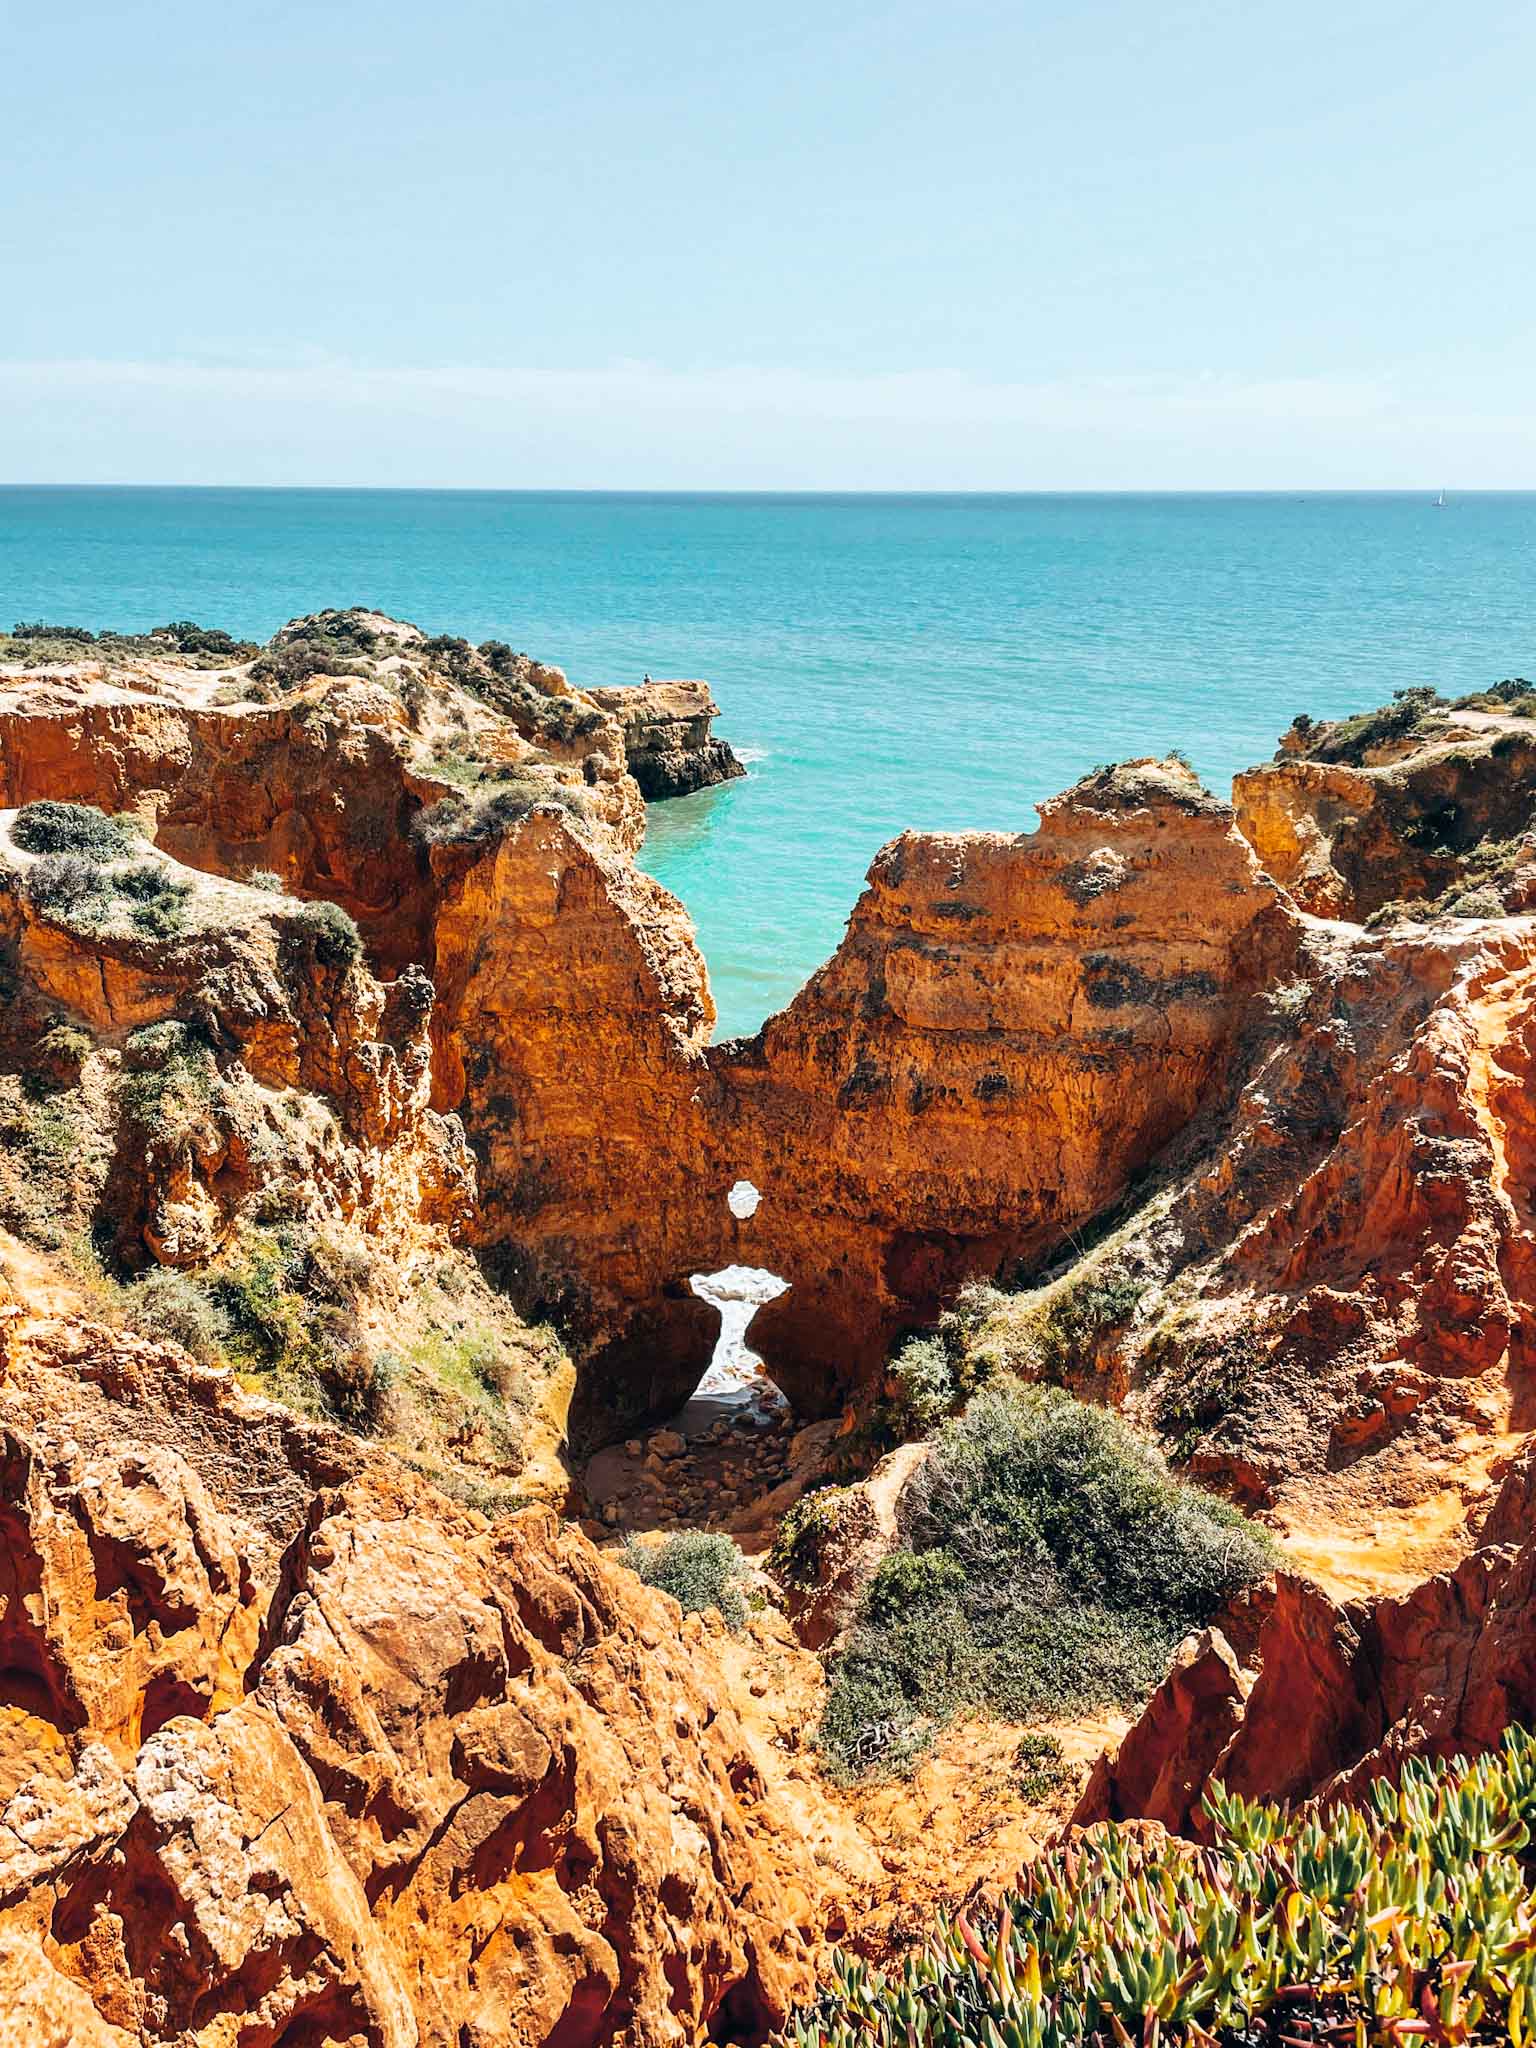 Hidden gems in Algarve - Praia dos Piratas